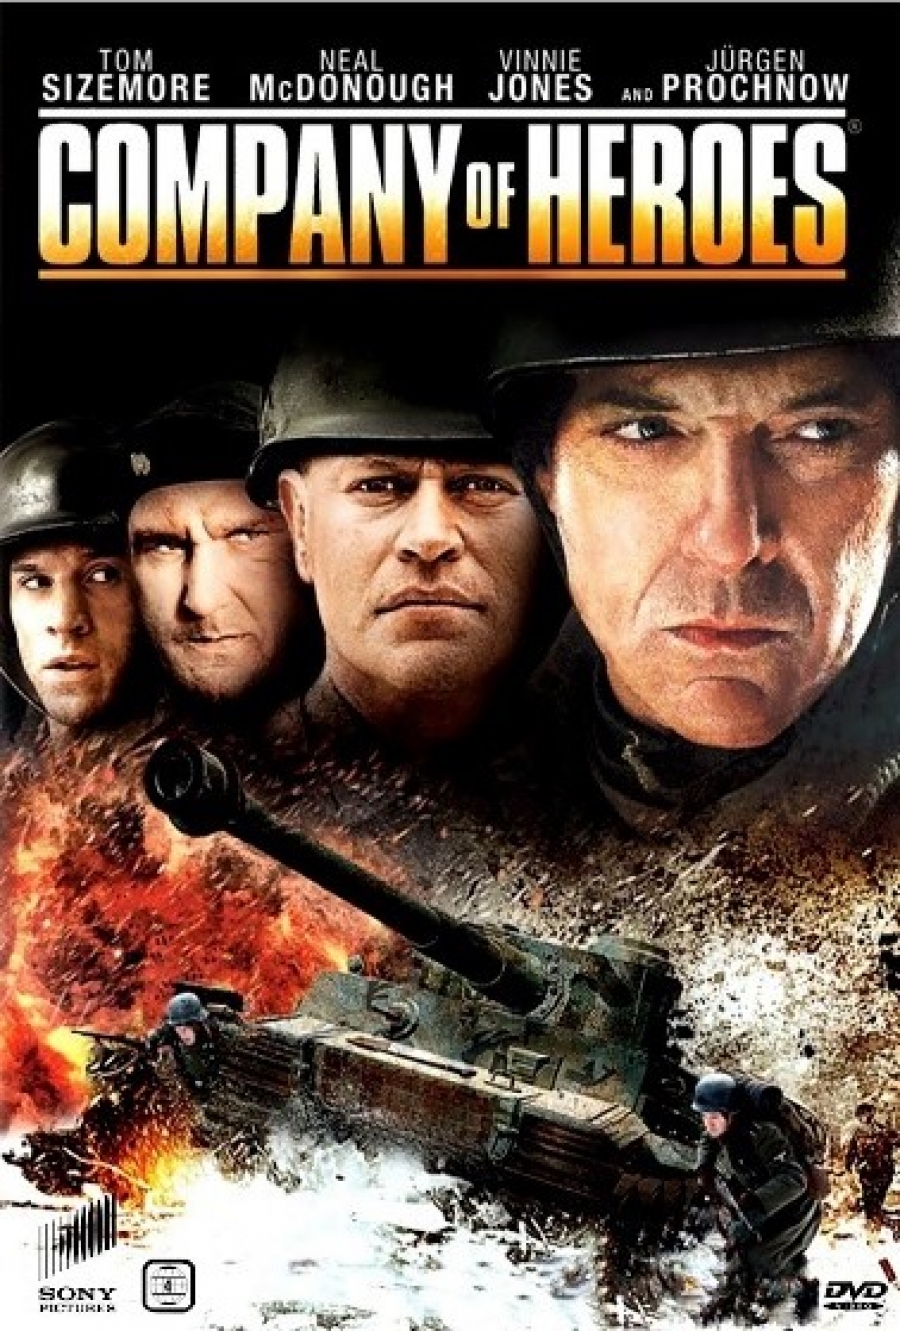 COMPANY OF HEROES (2013) ยุทธการโค่นแผนนาซี พากย์ไทย